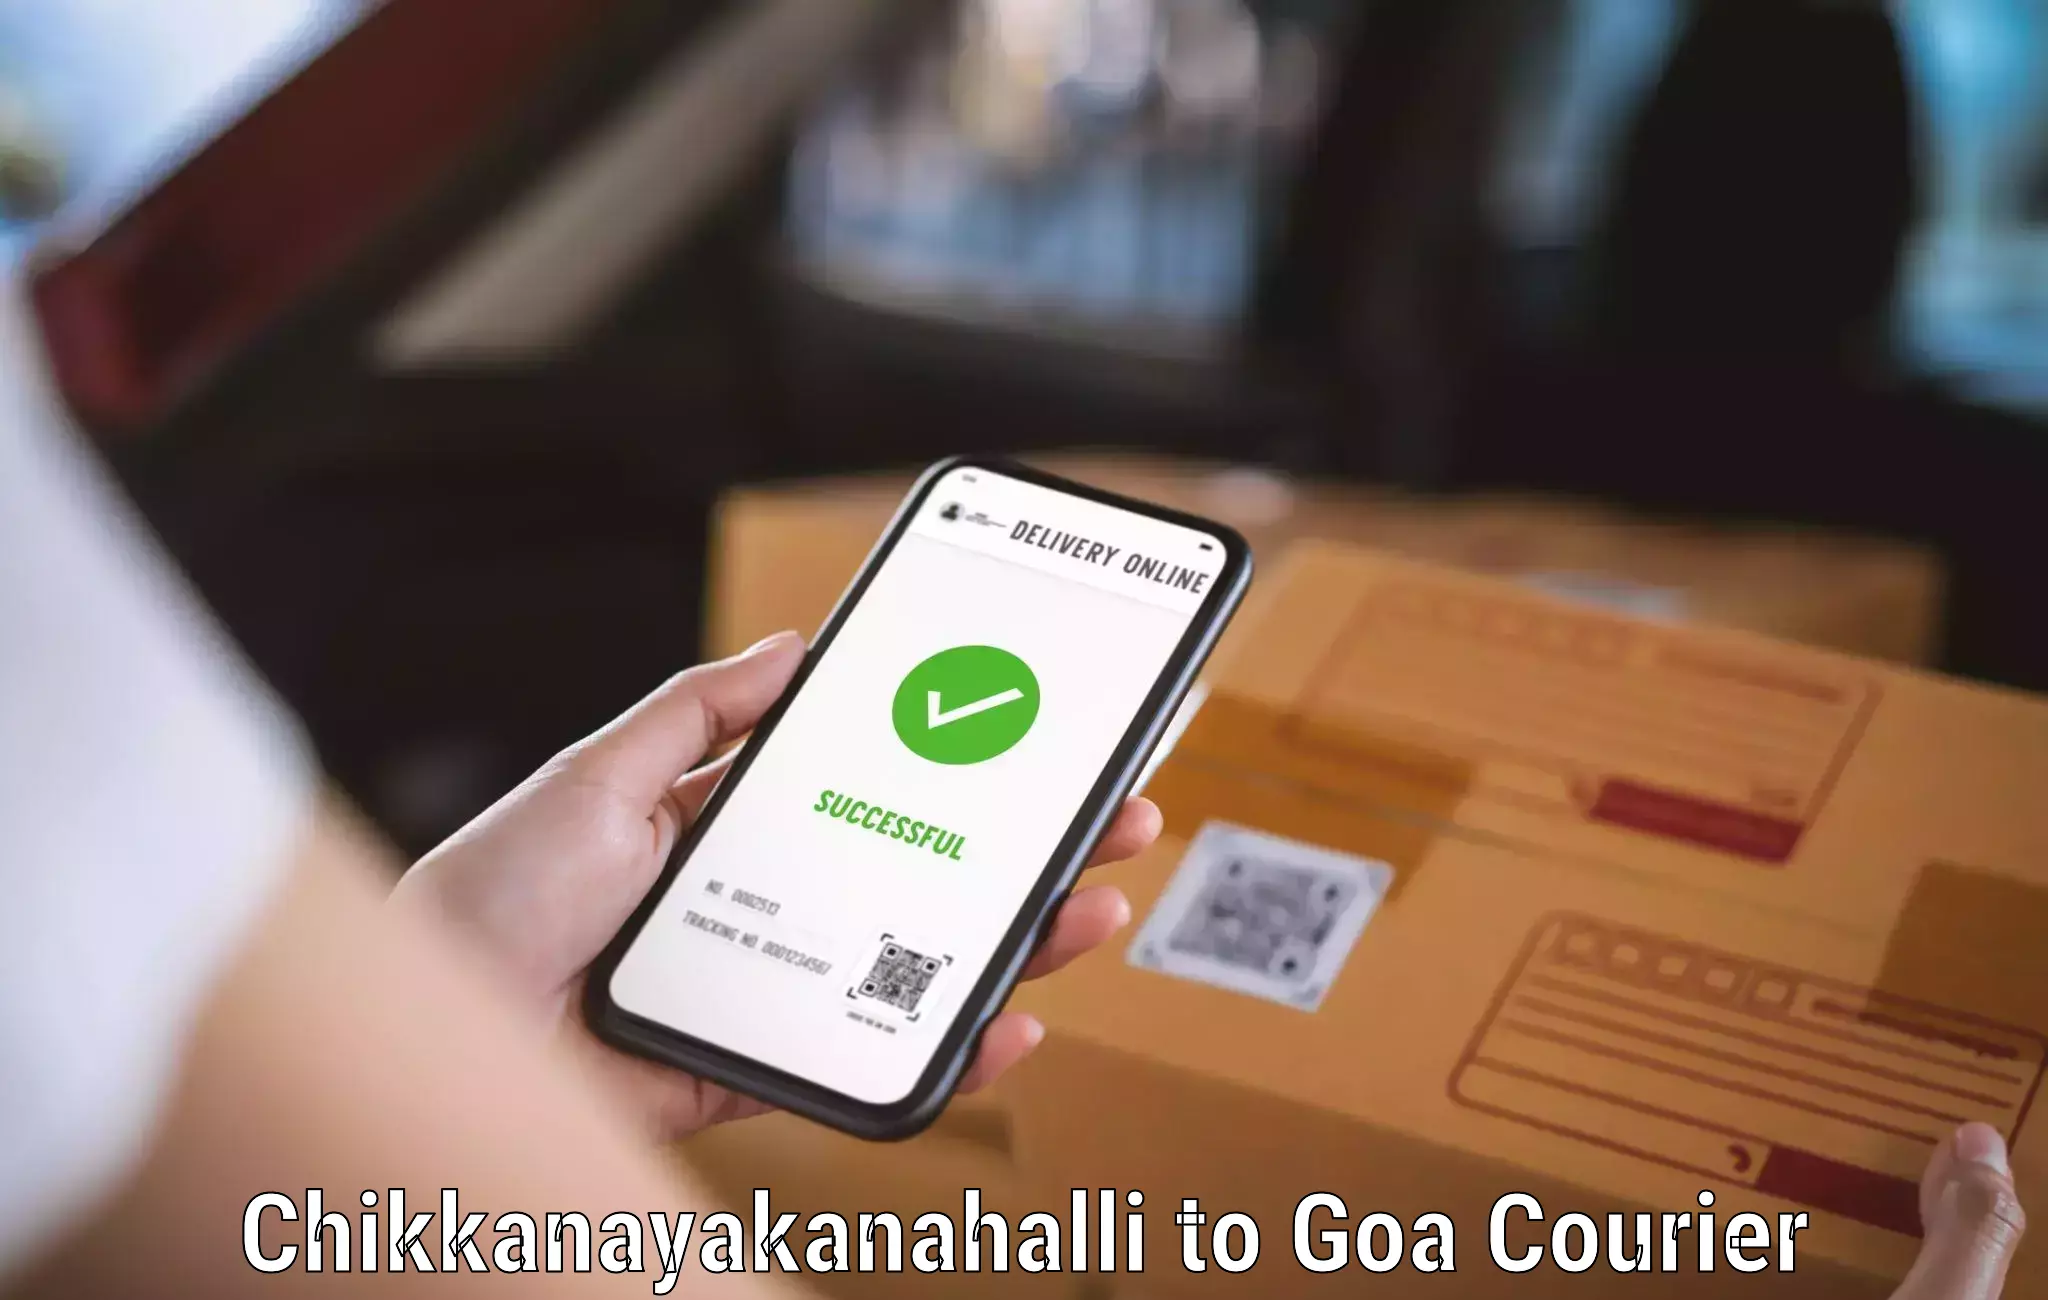 Courier service comparison Chikkanayakanahalli to NIT Goa